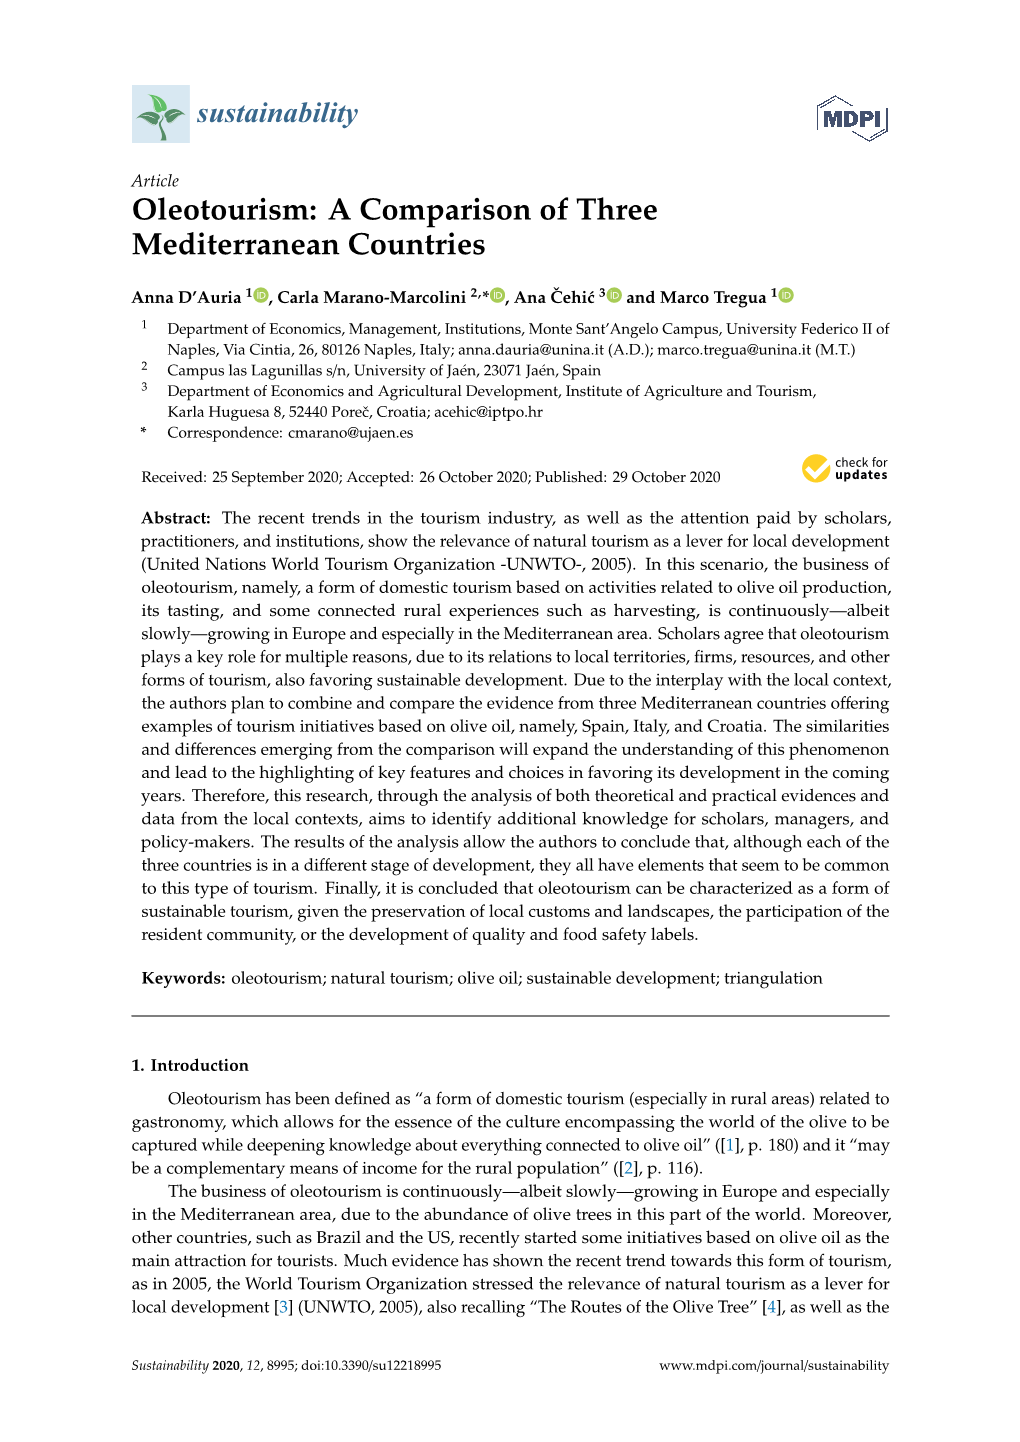 Oleotourism: a Comparison of Three Mediterranean Countries